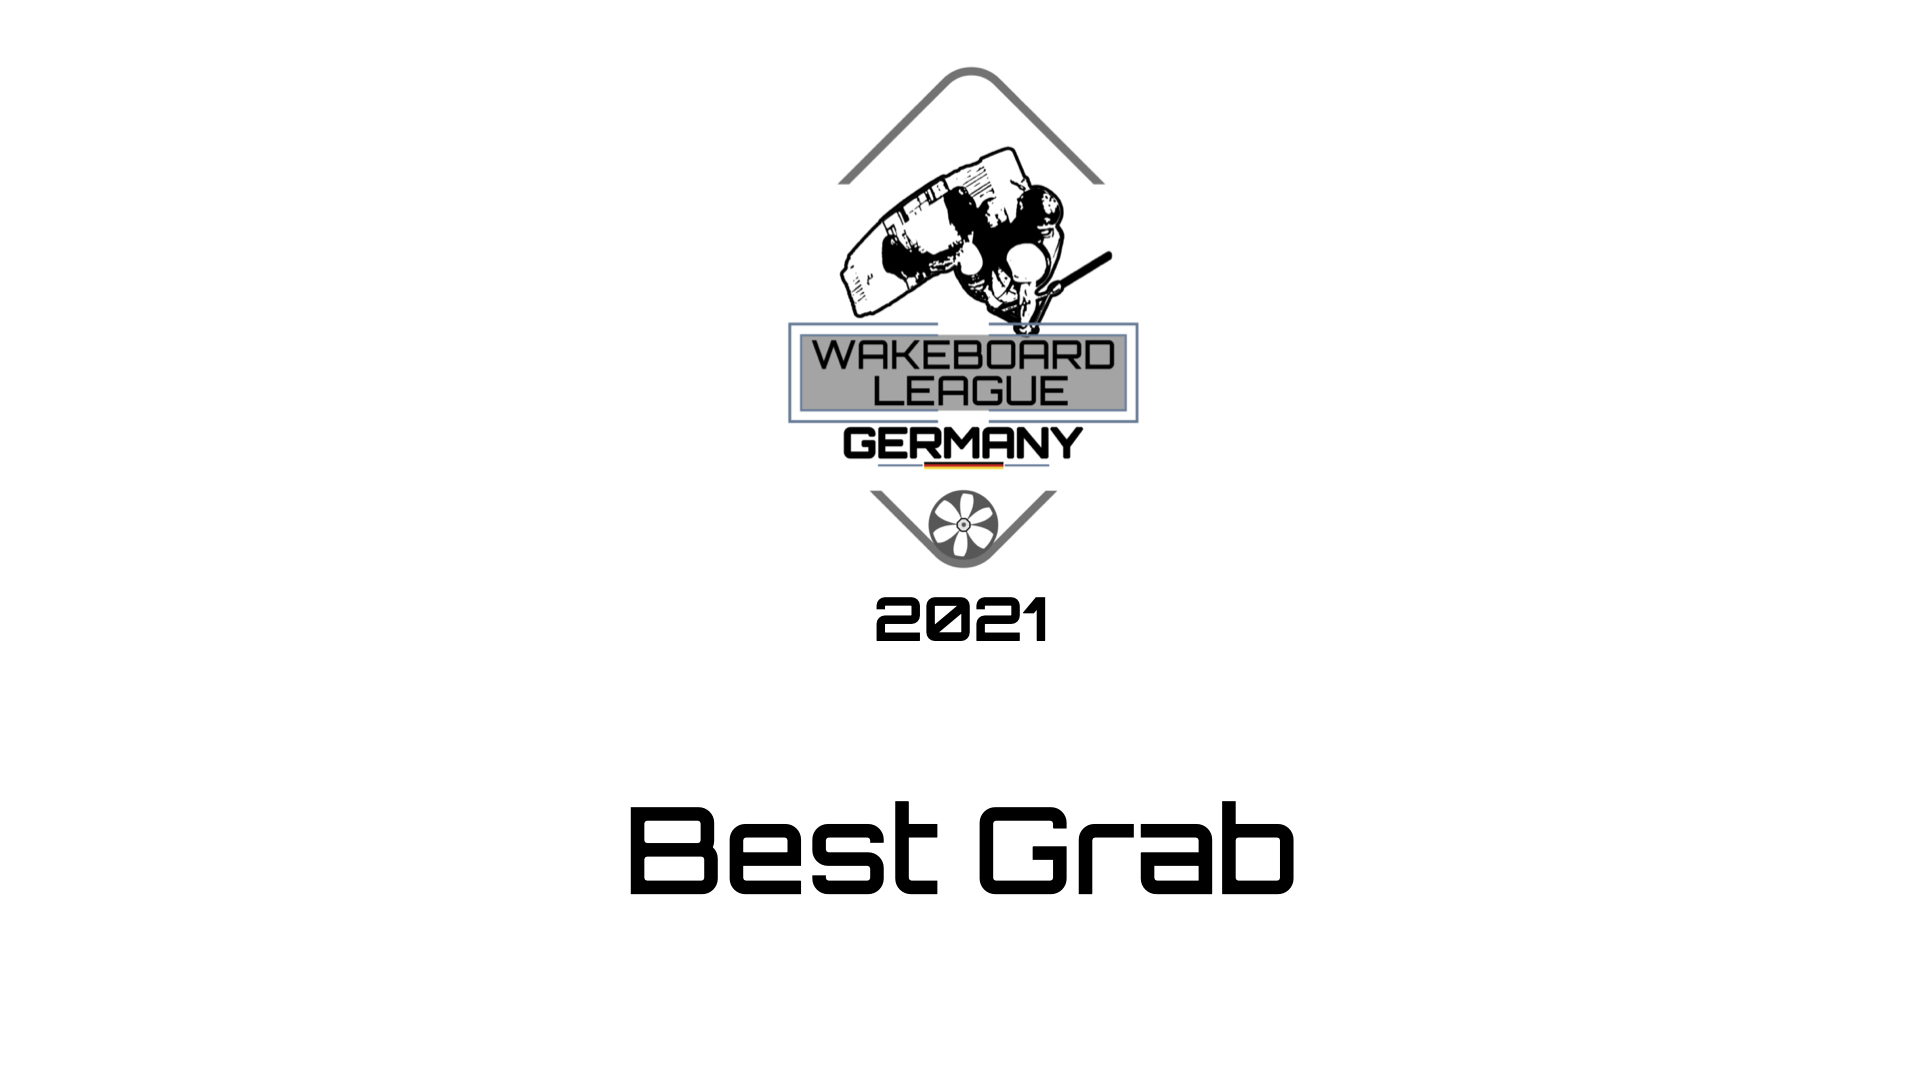 Wakeboard League Germany 2021 - #1 Best Grab